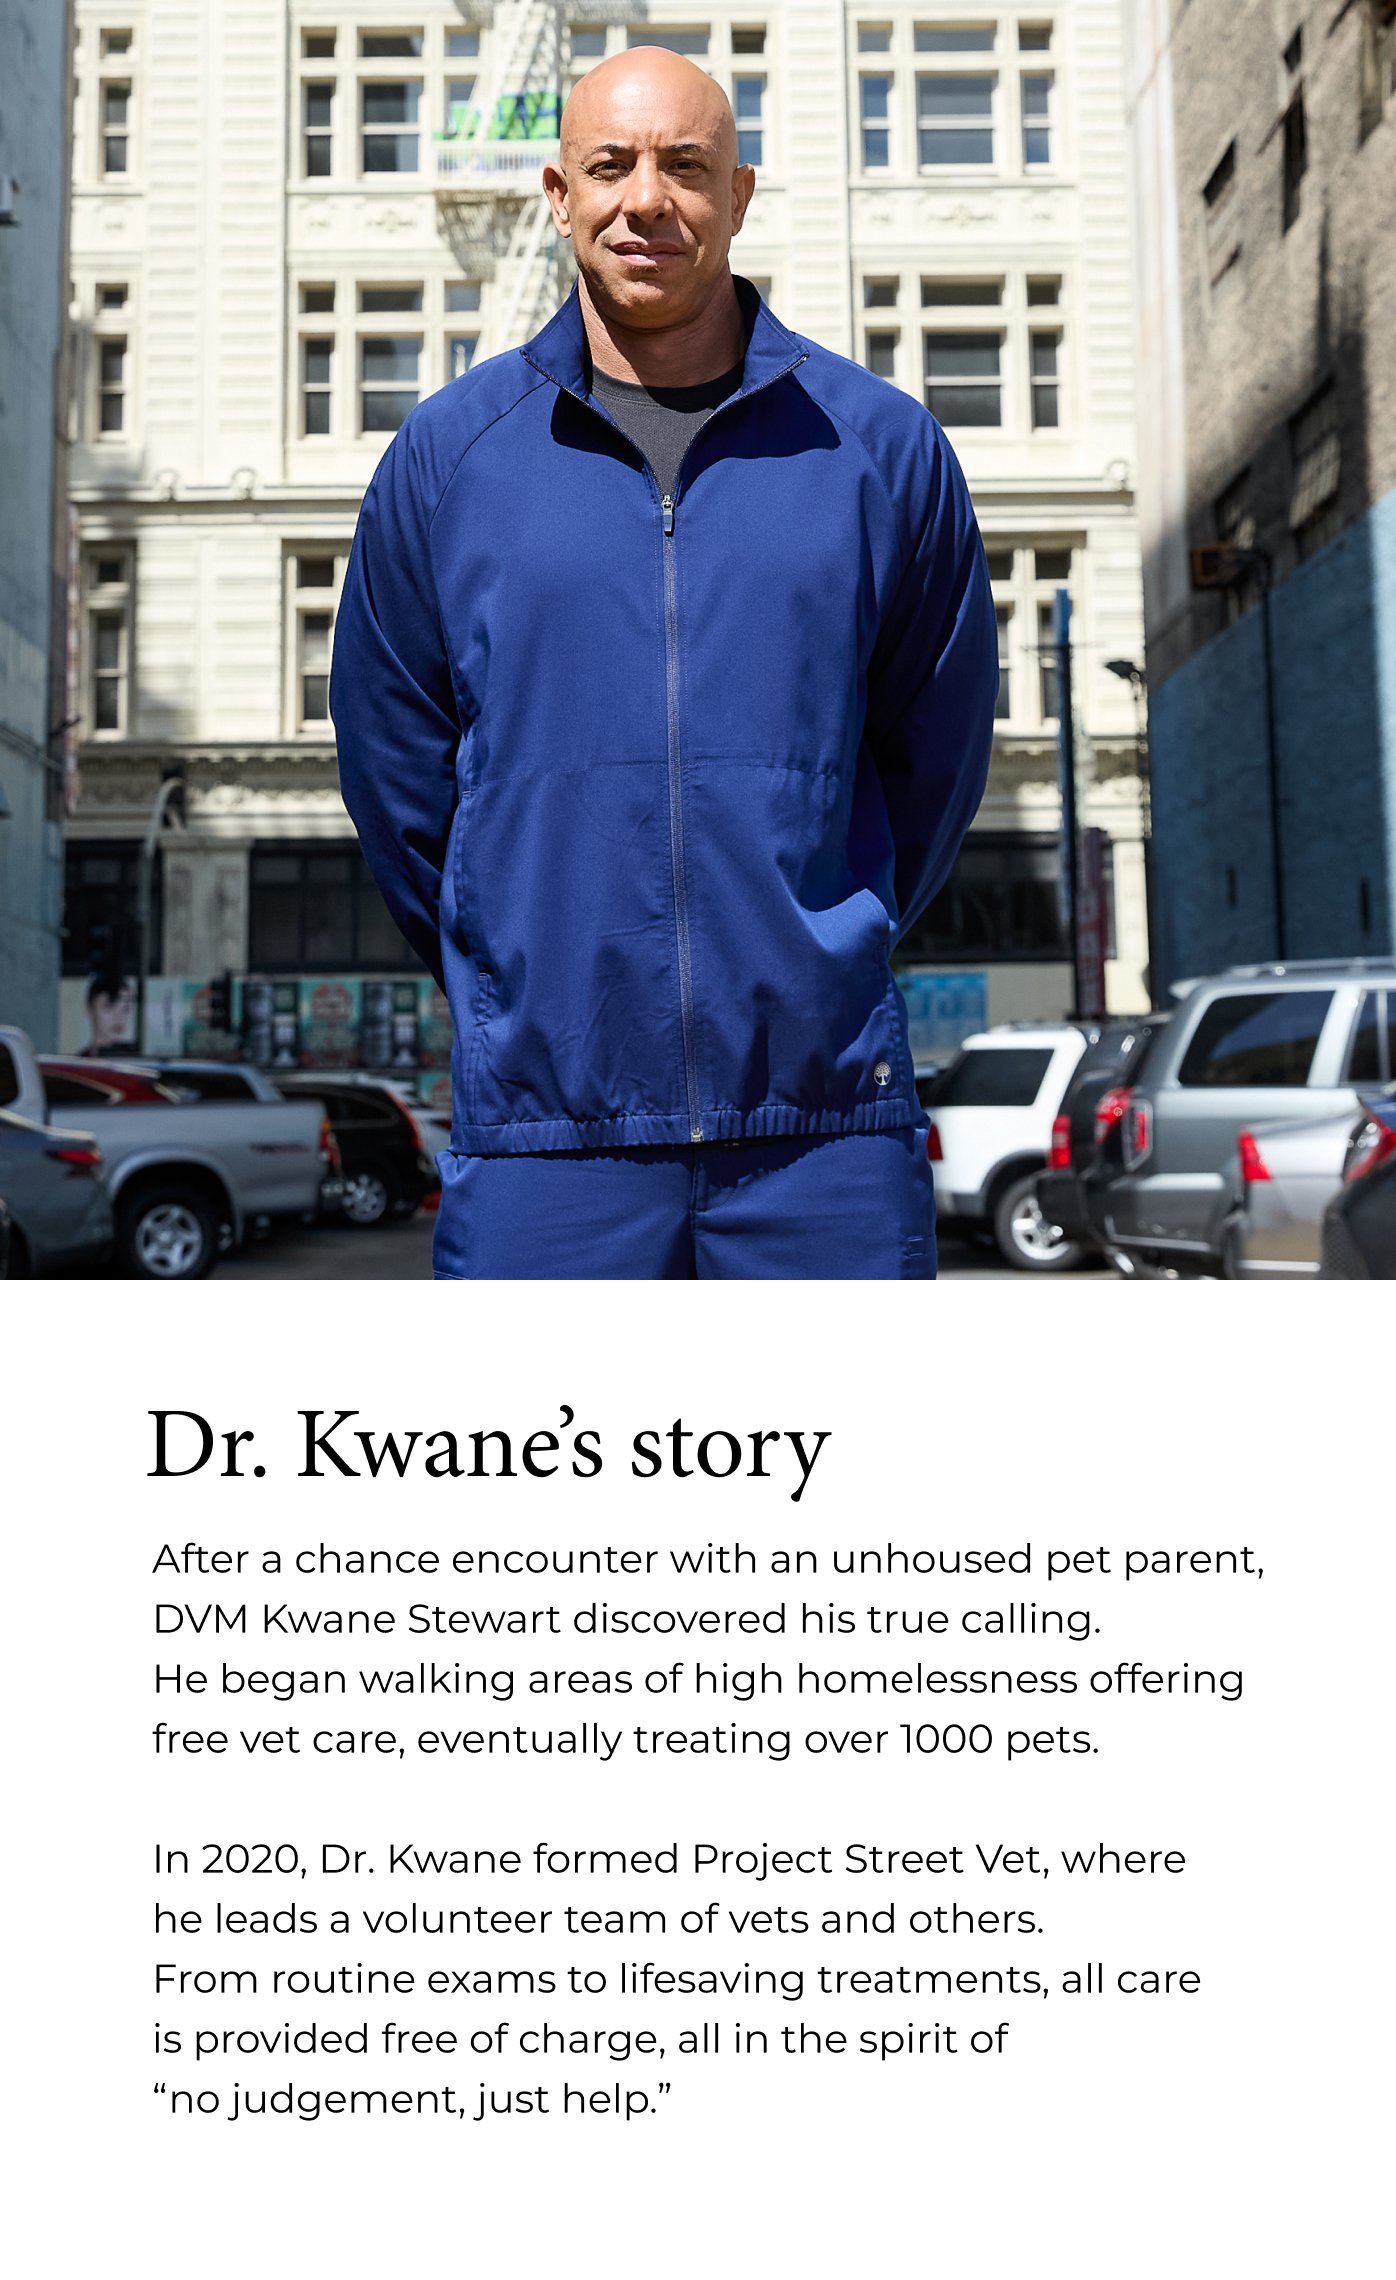 dr. kwane's story